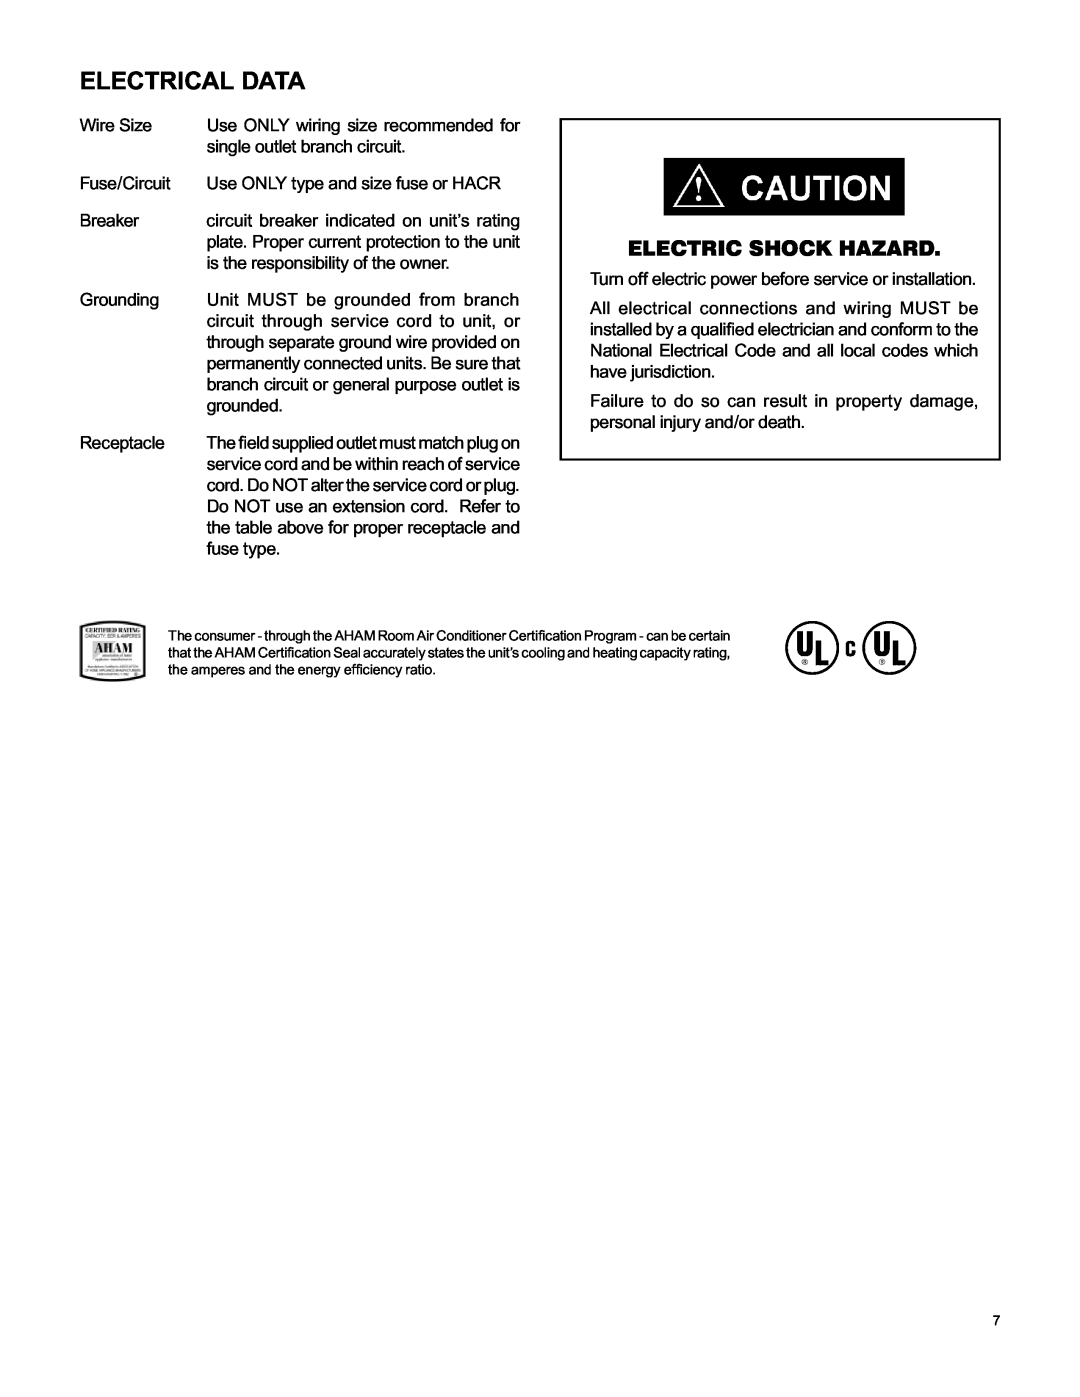 Friedrich RAC-SVC-06 service manual Electrical Data, Electric Shock Hazard 